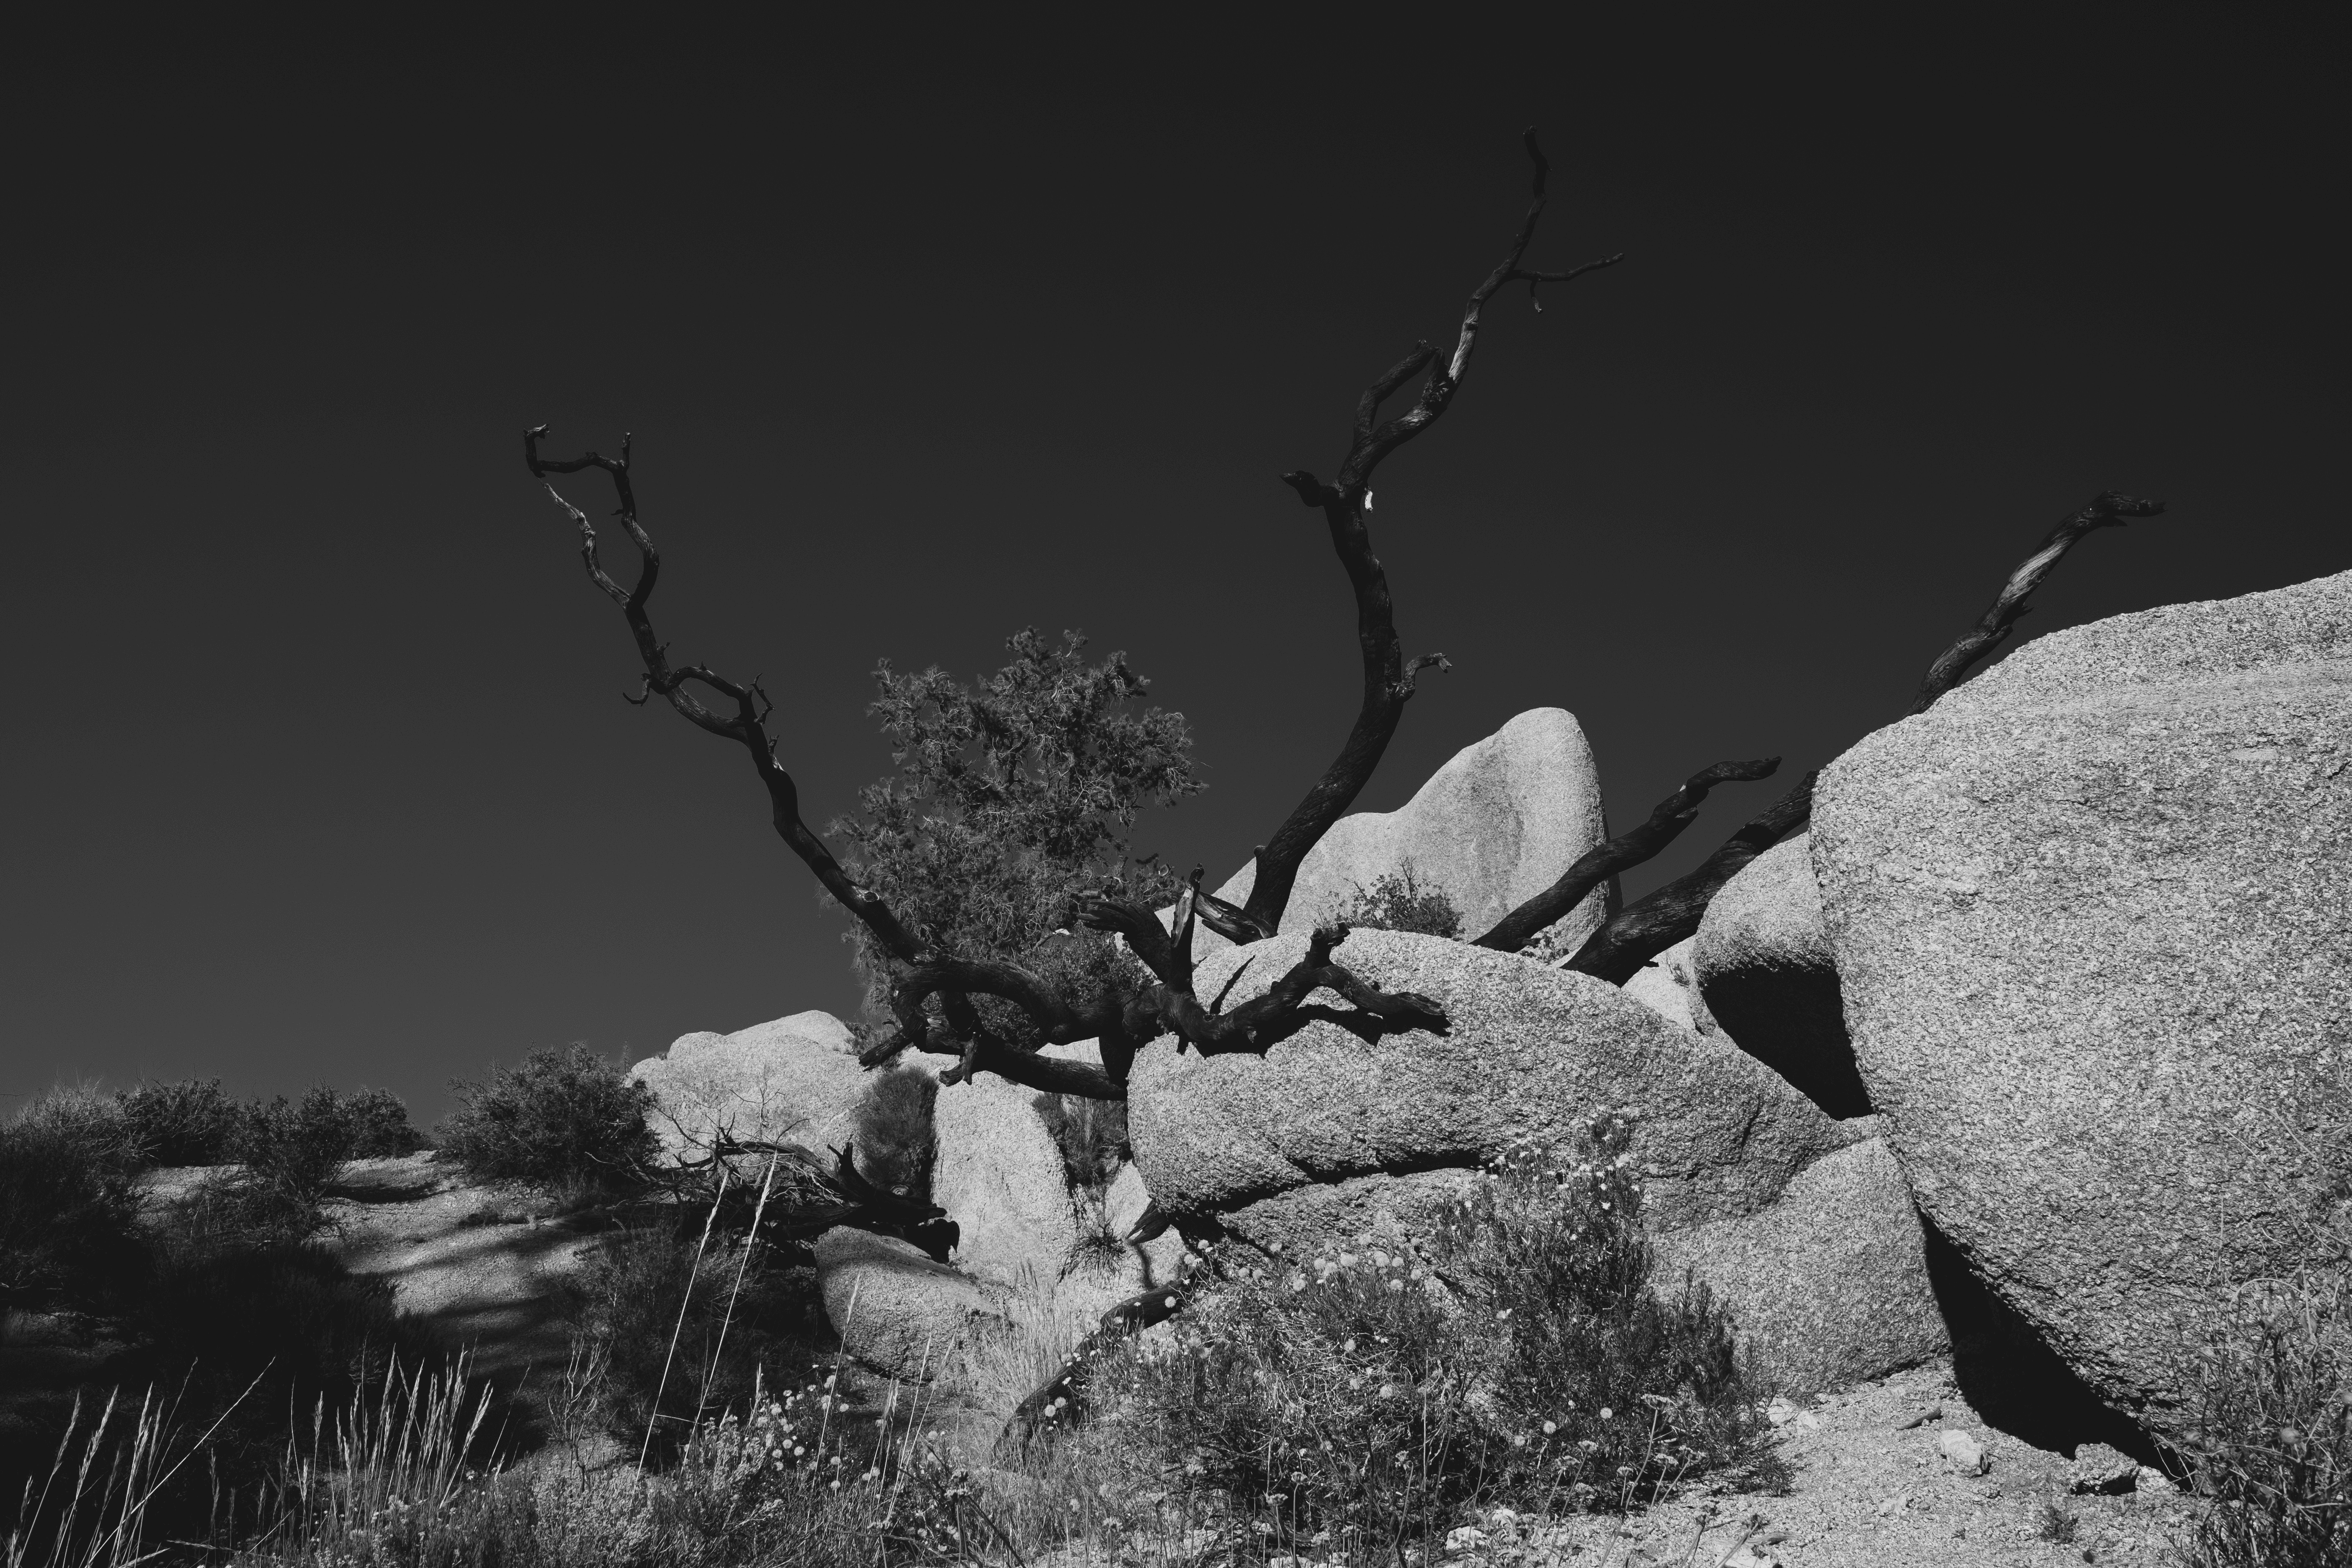 Joshua Tree in Black and White #21